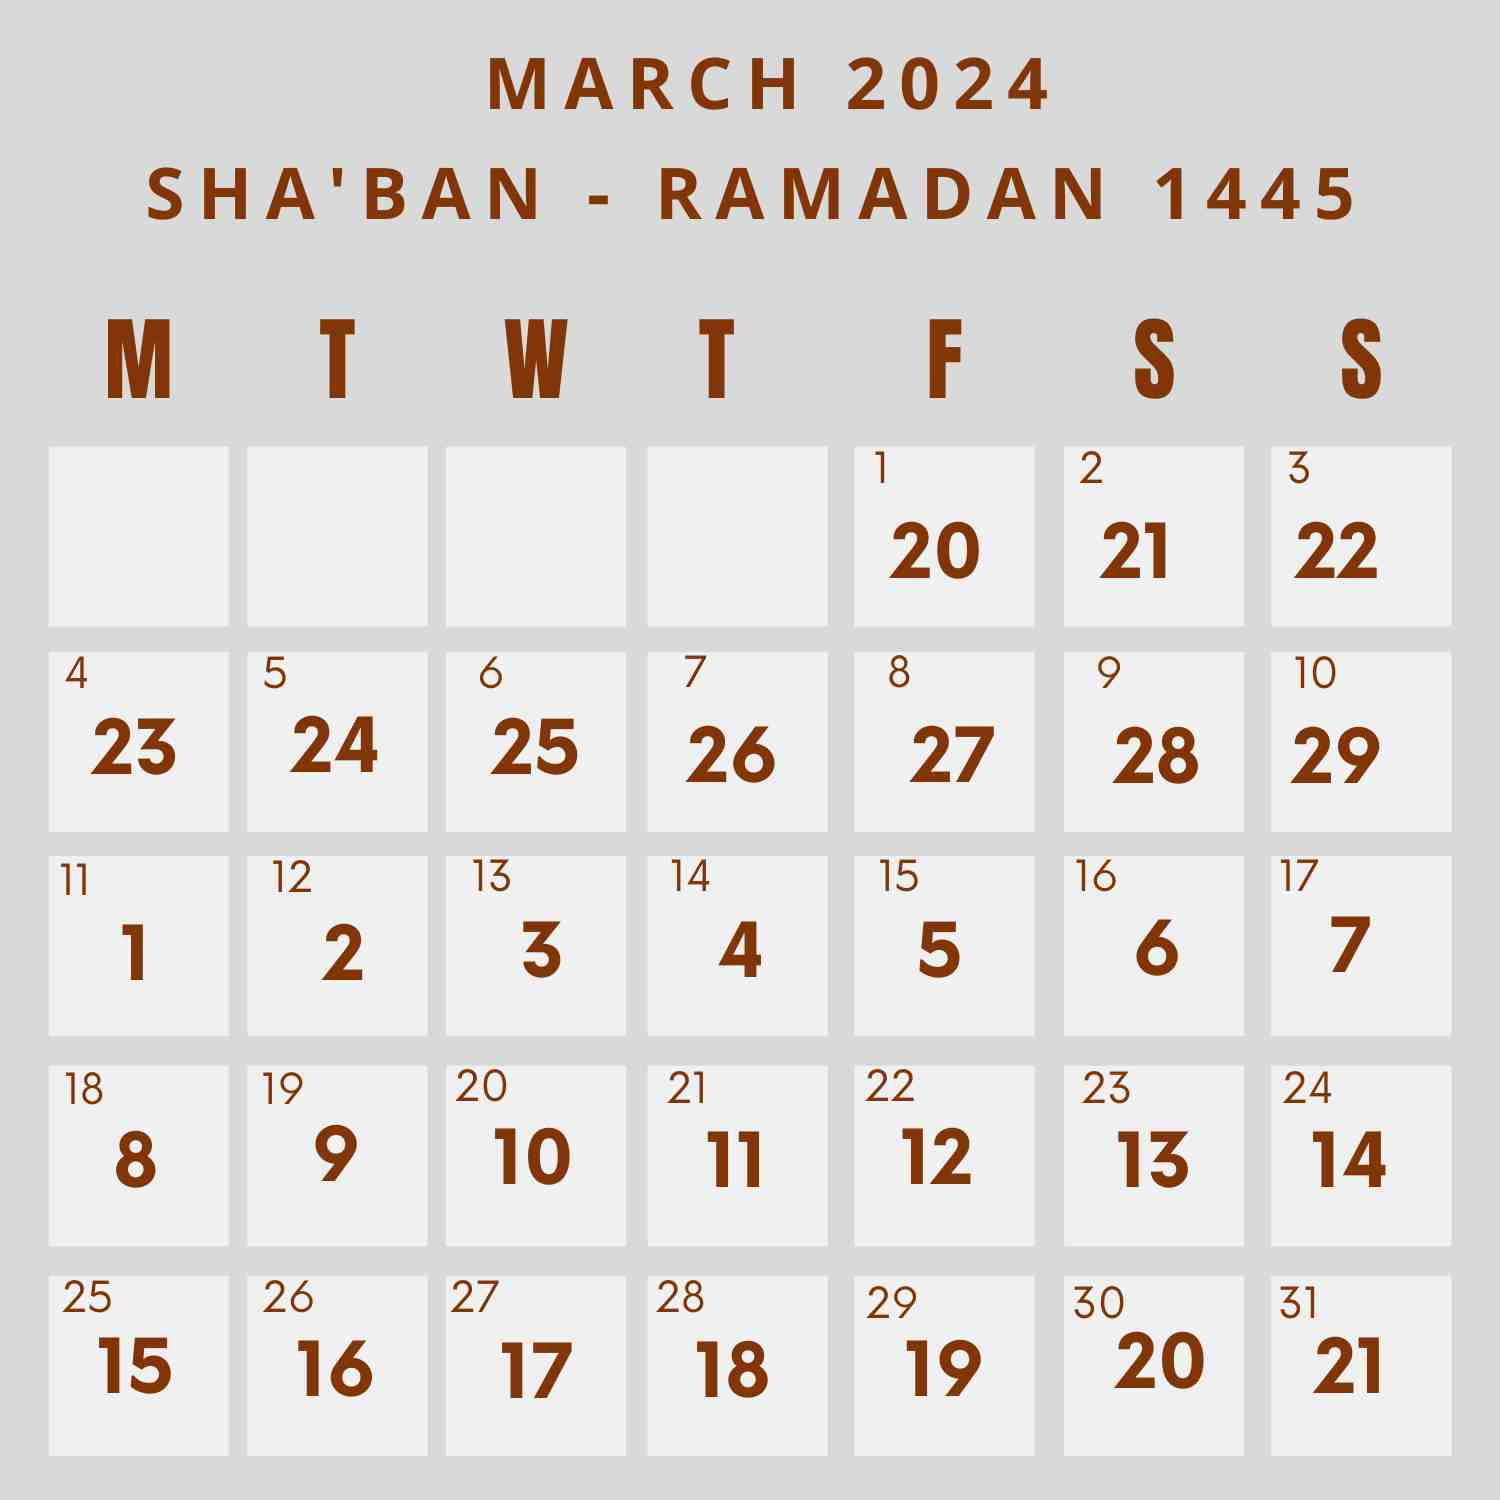 Islamic Calendar 2024 - Khwajadarbar in 31 July 2024 In Islamic Calendar